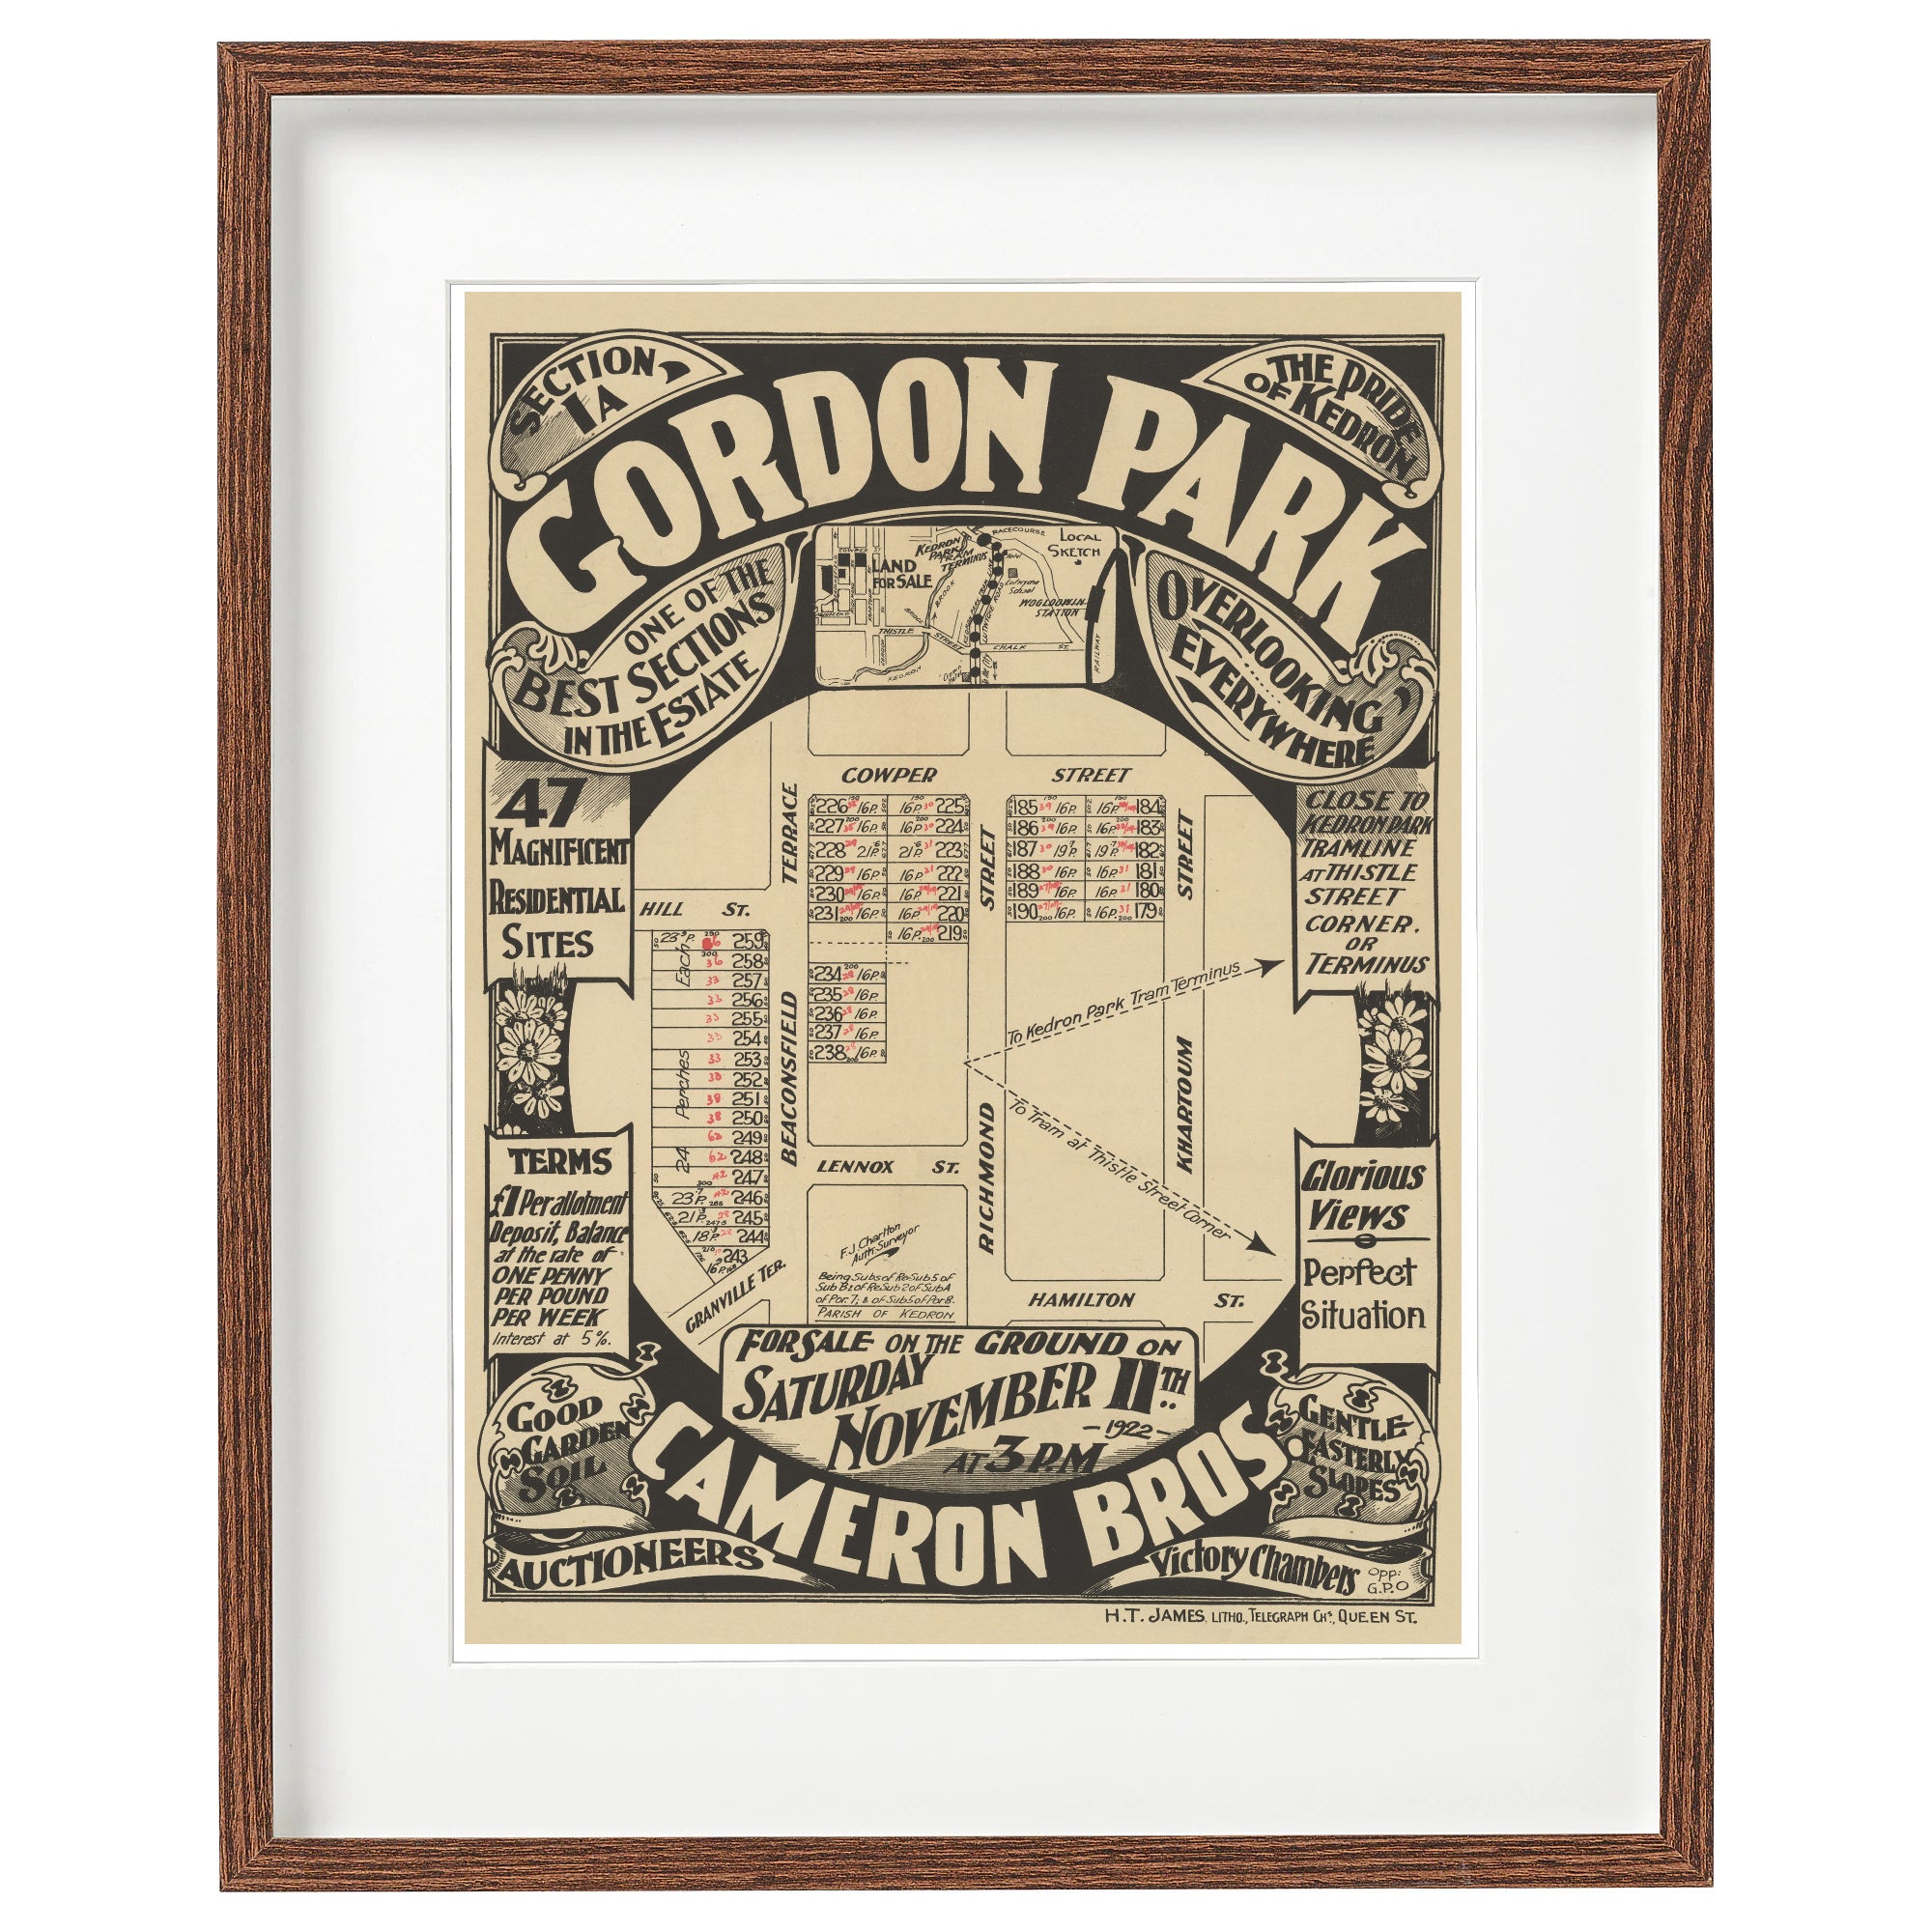 1922 Gordon Park - Gordon Park - Section 1a